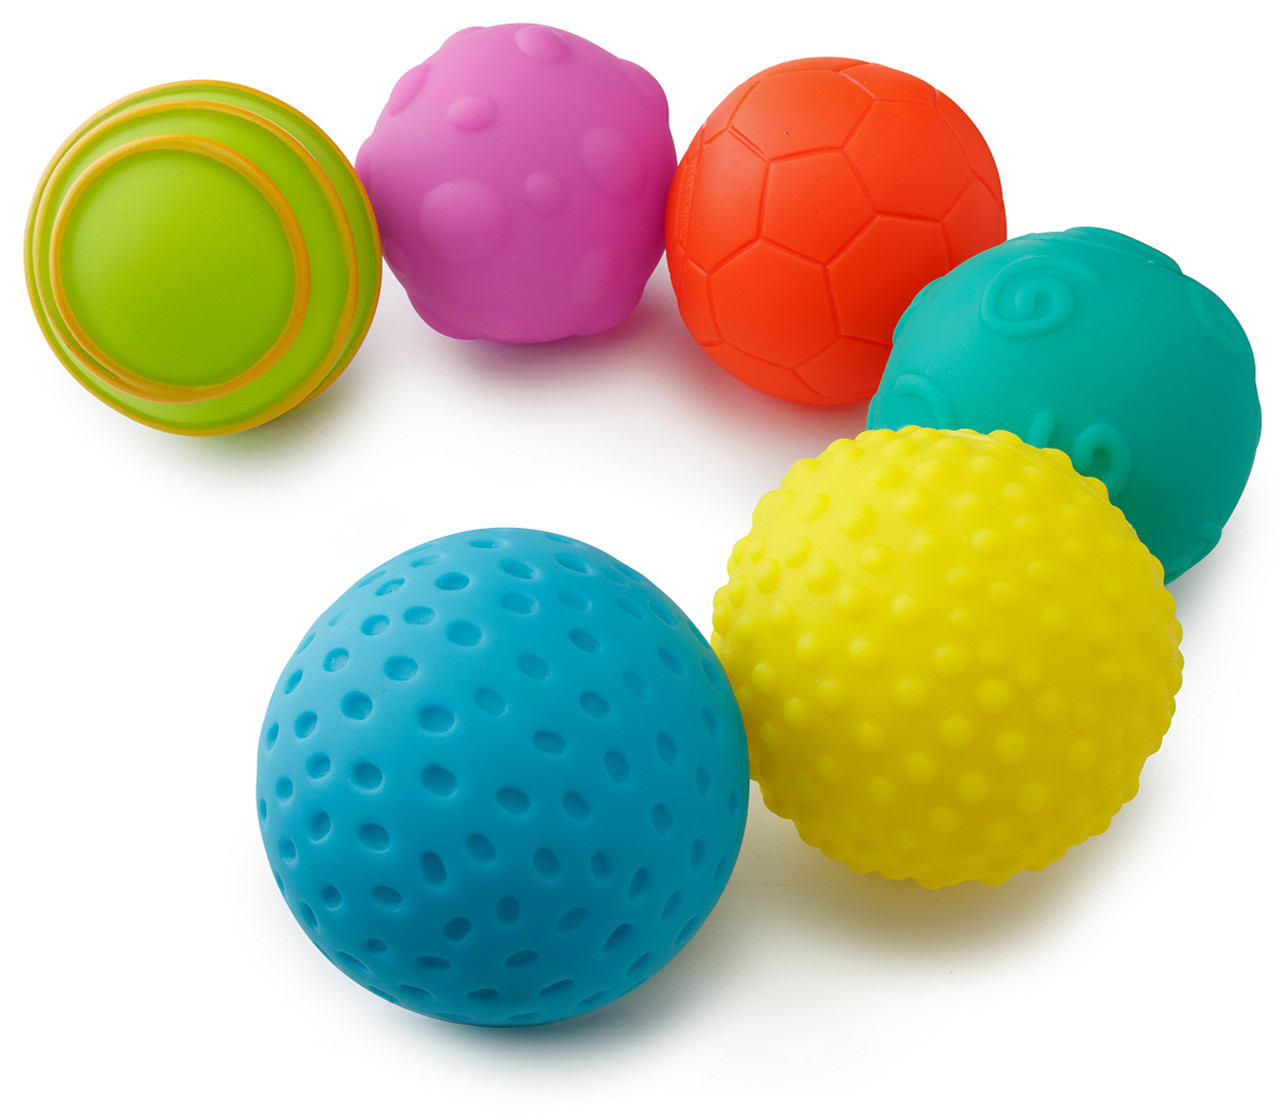 textured balls for babies